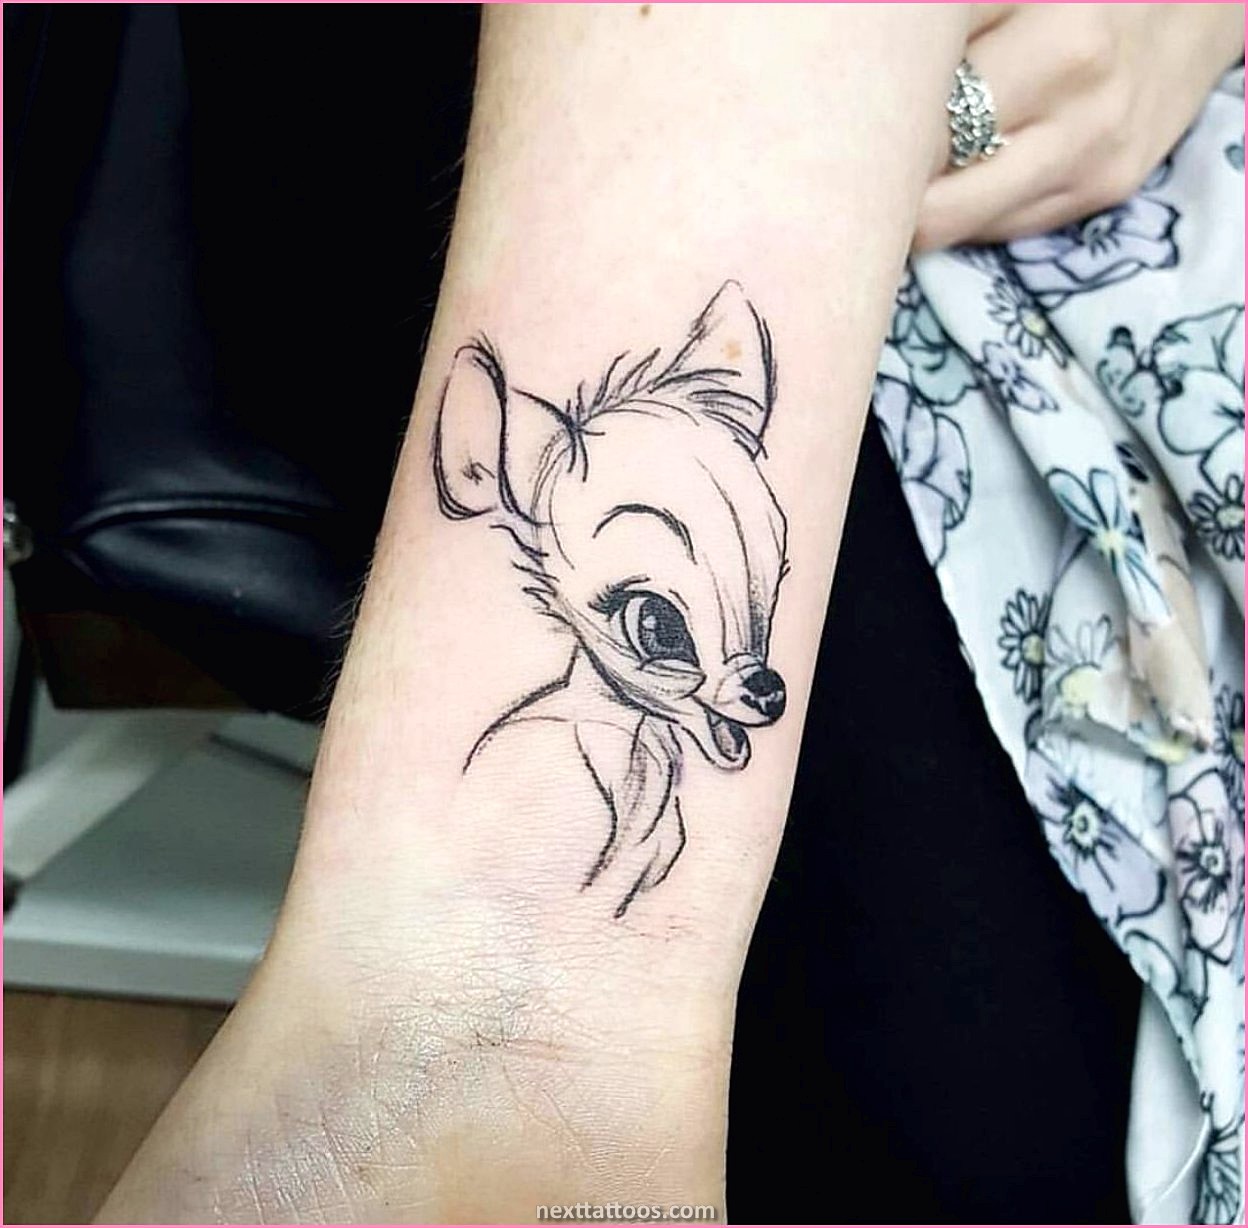 Disney Animal Tattoos - What's the Best Disney Animal Tattoo?